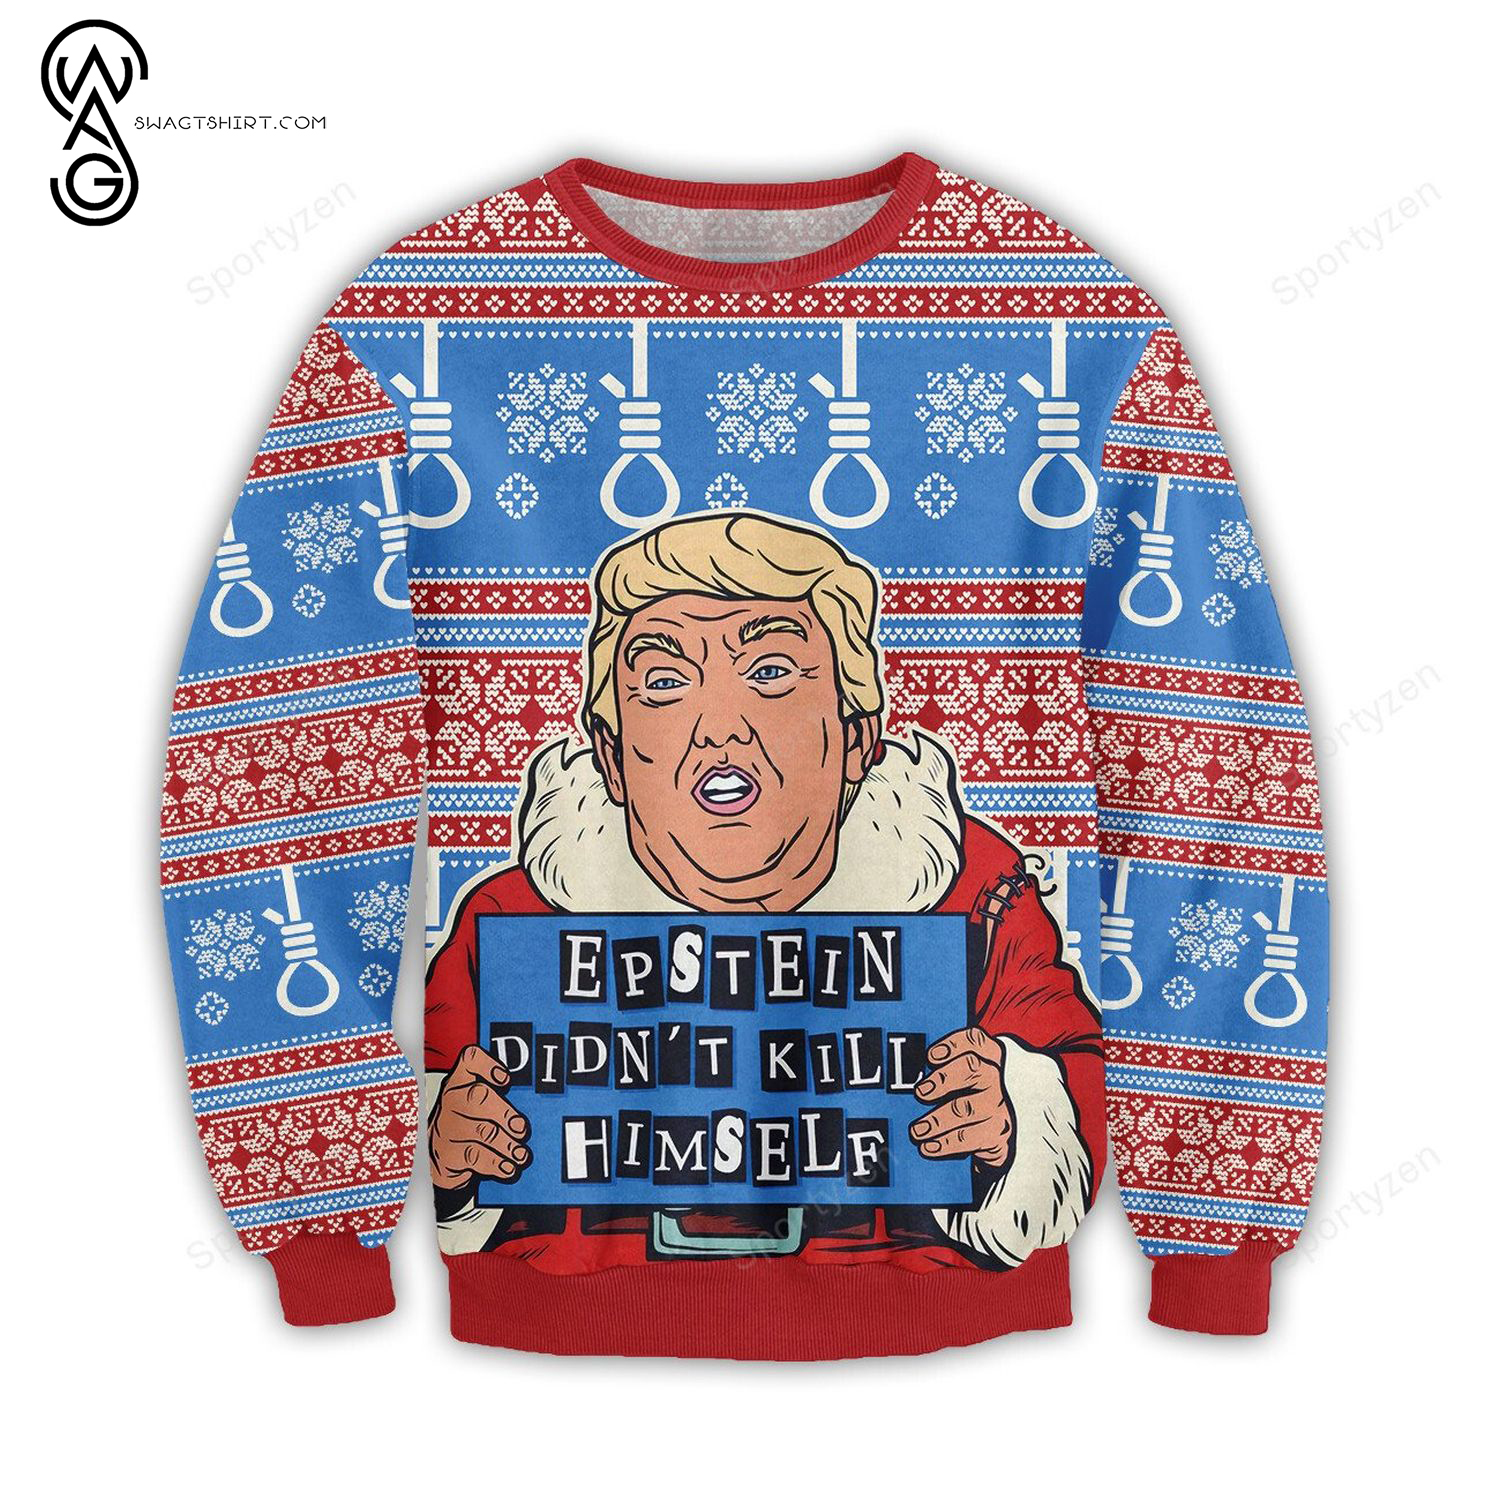 Epstein Didn't Kill Himself Full Print Ugly Christmas Sweater